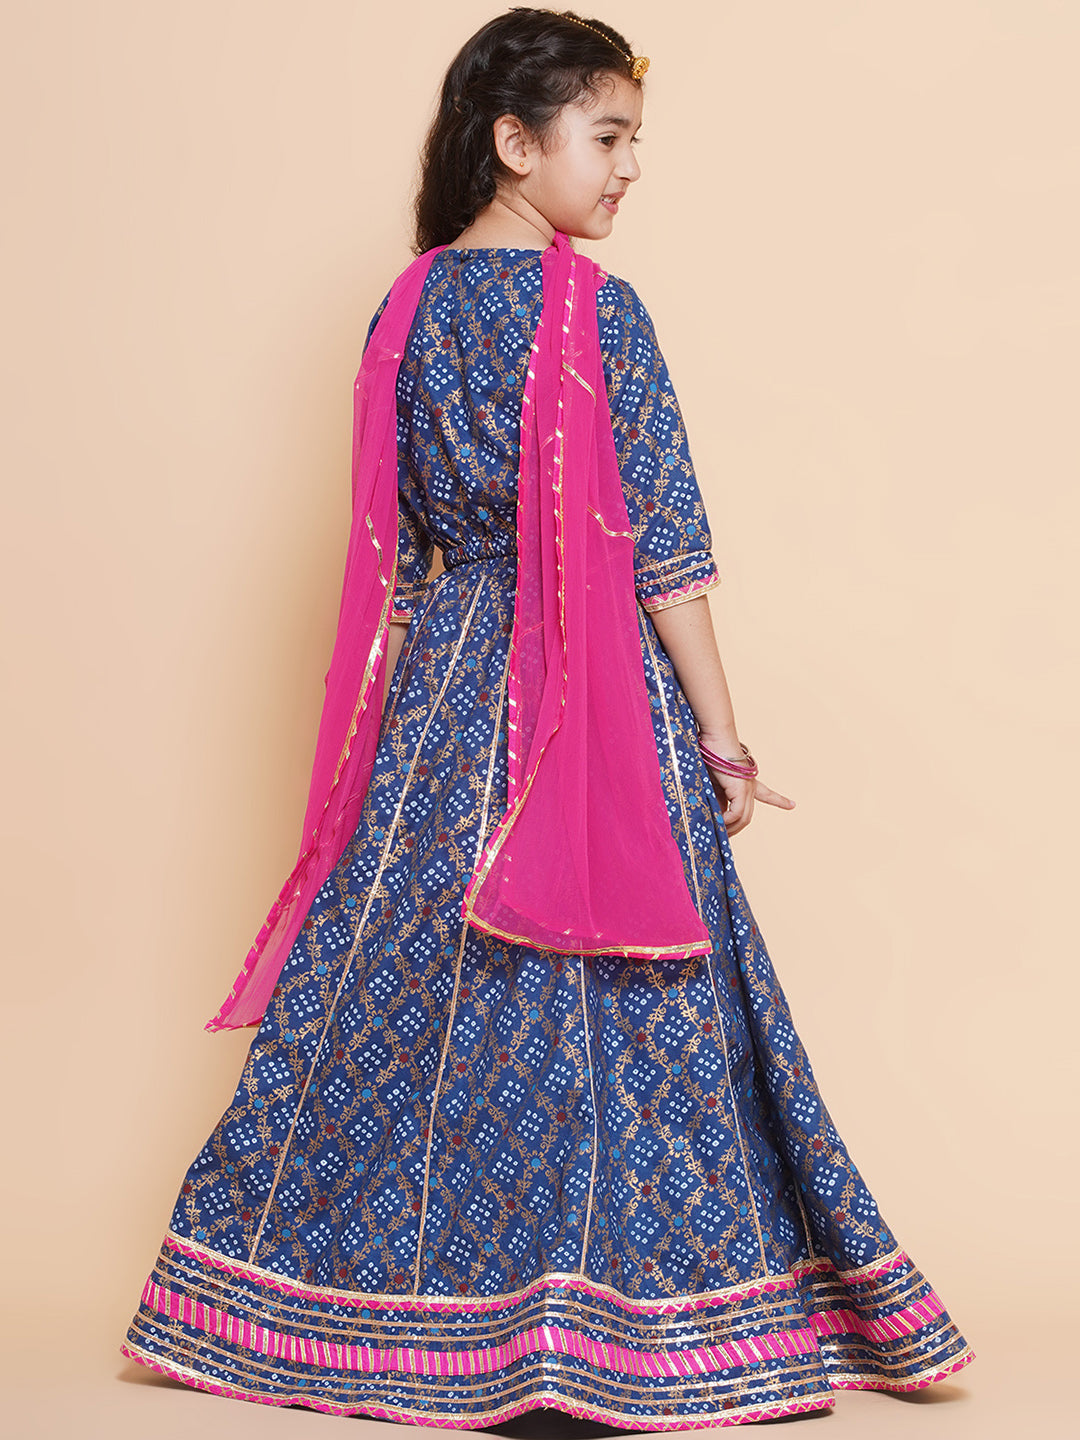 Sky Blue Kanjivaram Silk Half Saree Lehenga Choli With Blouse and Dupatta  South Indian Wedding Lehenga | Half saree lehenga, Indian wedding lehenga,  Half saree